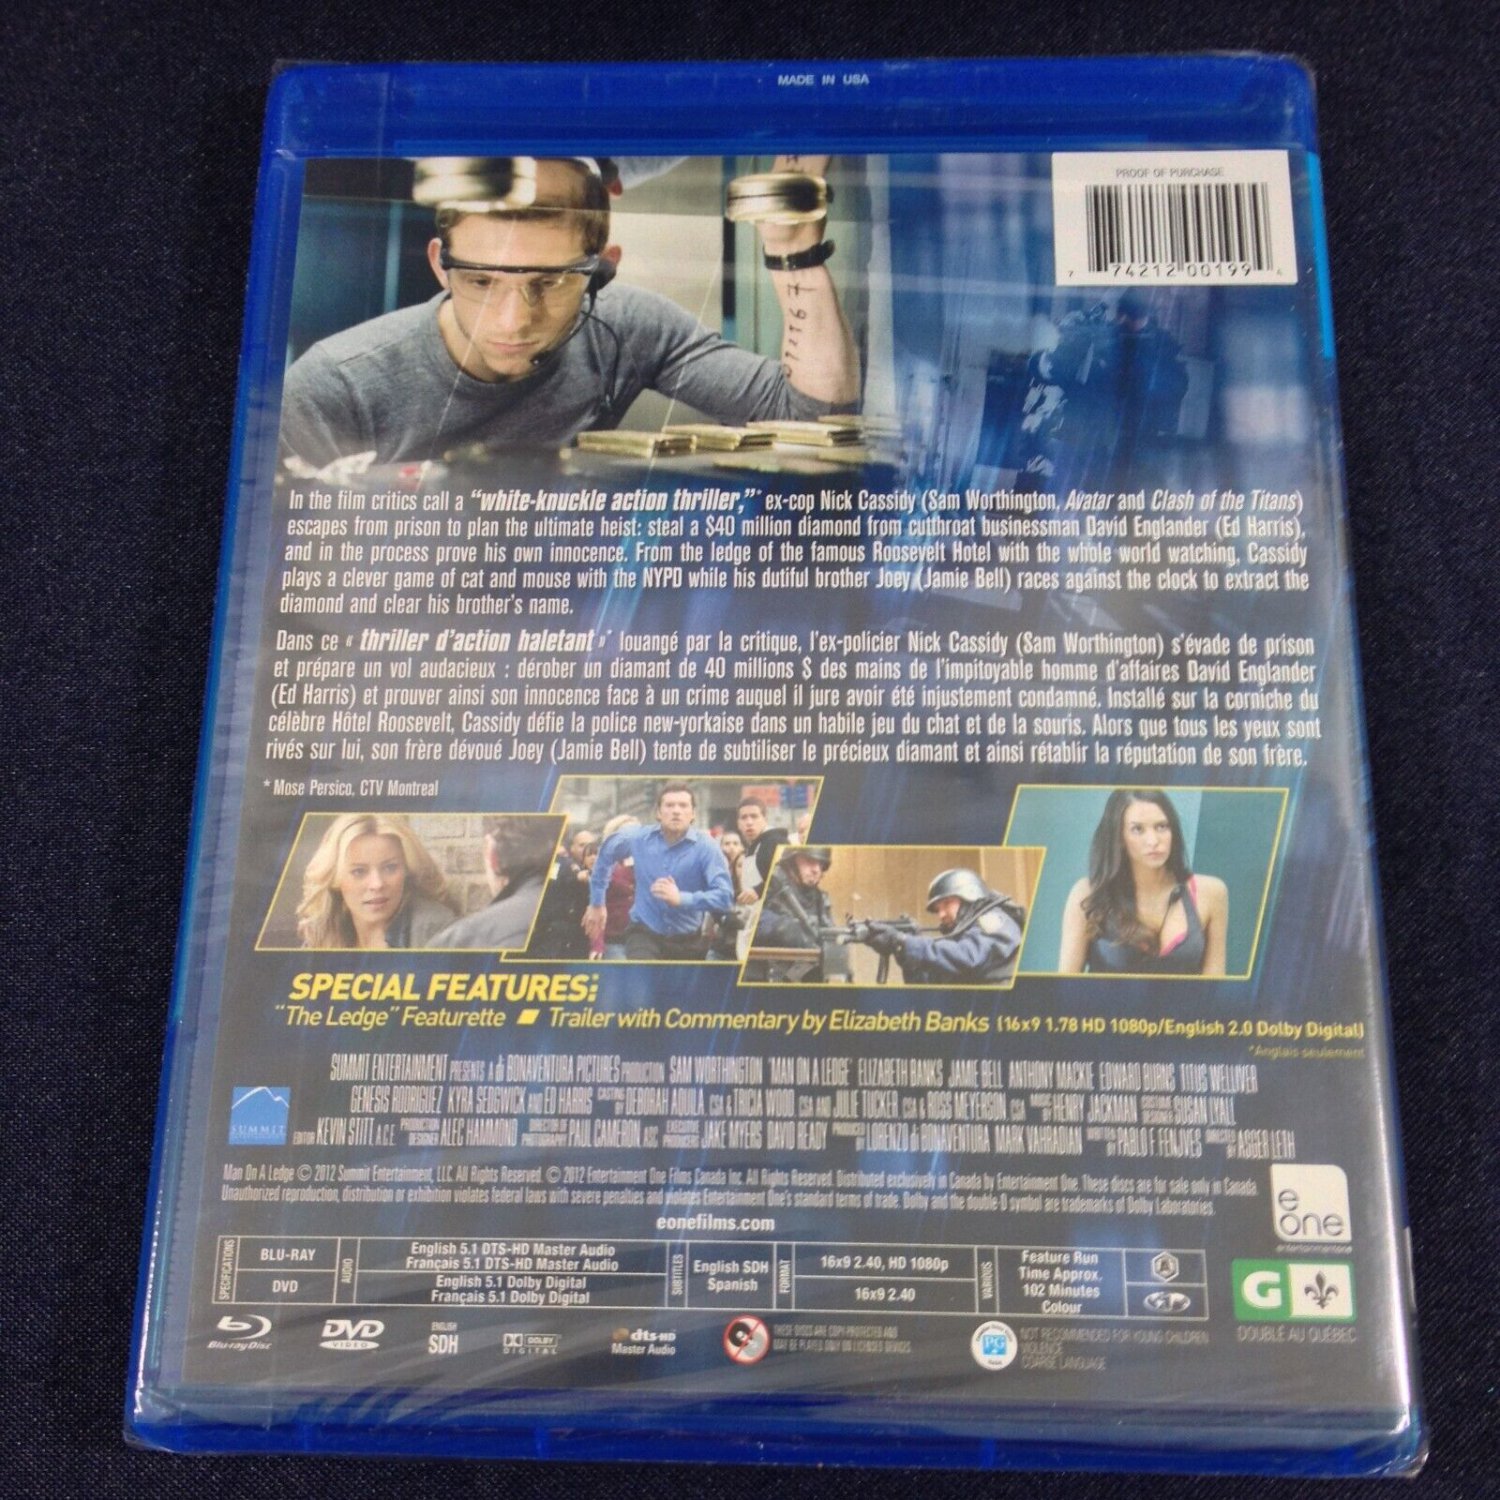 Man on a Ledge 2012  LE Temps D'un Vol  Blu ray Combo Pack  DVD  New